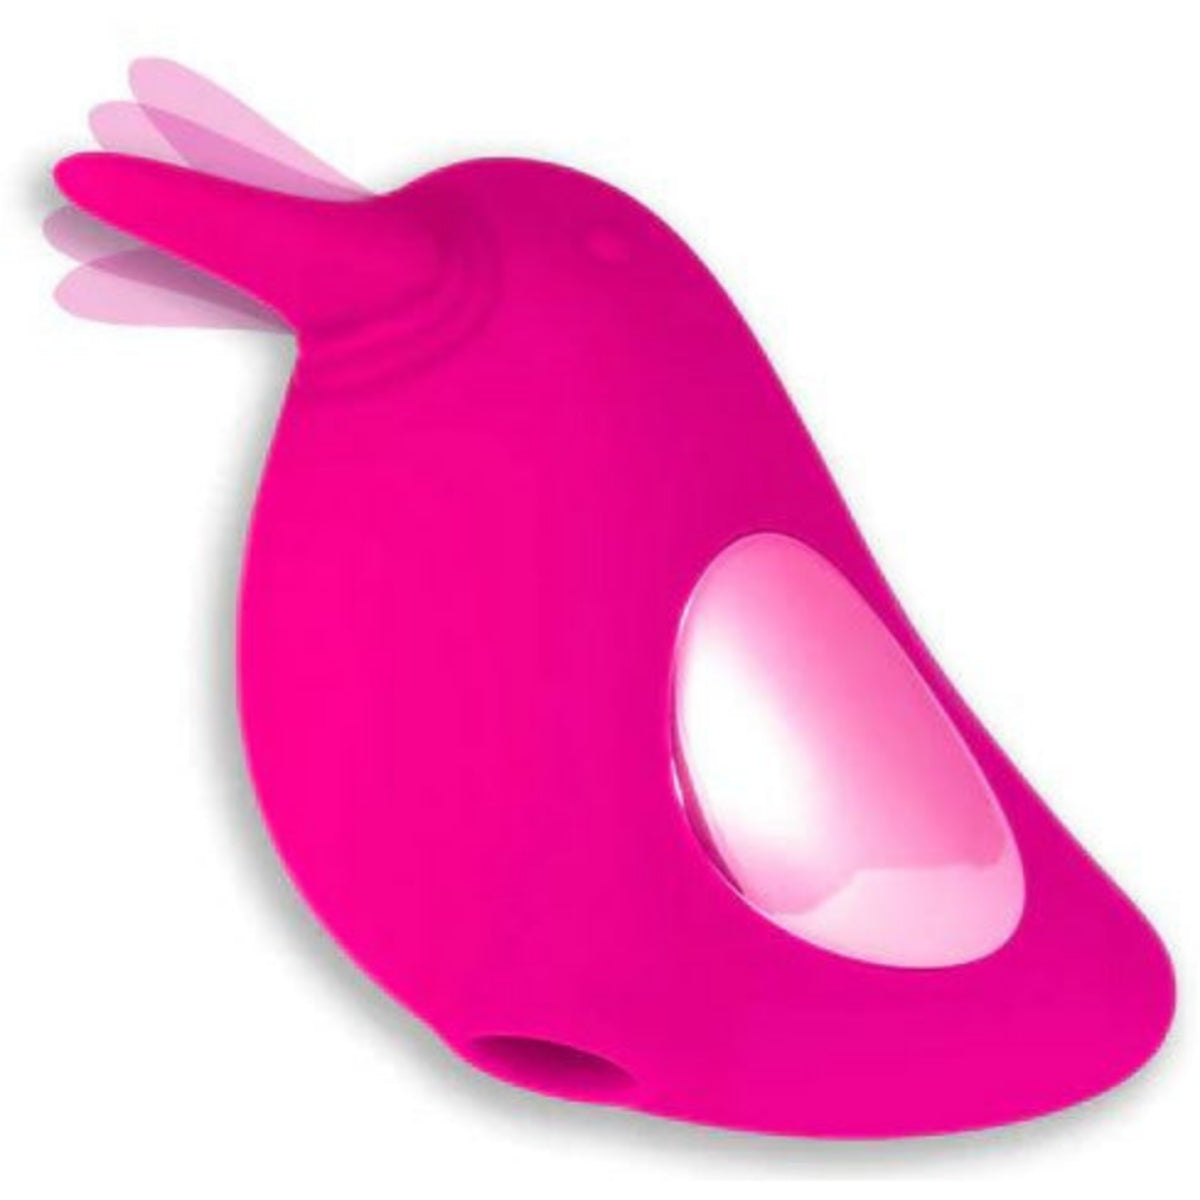 Caress Kiwi Premium Pink Hummingbird Stimulator Arouser Massager